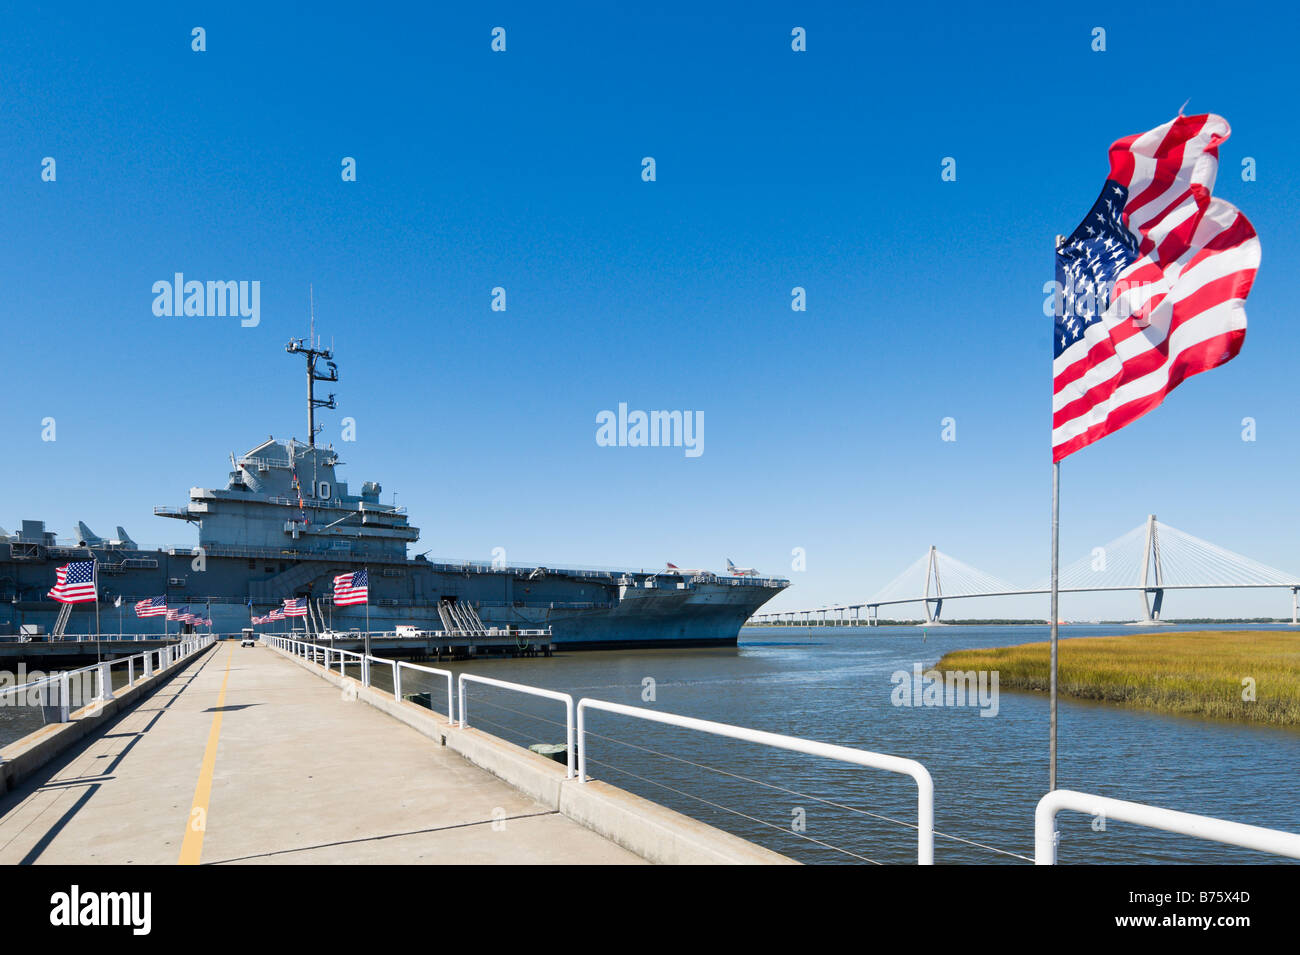 USS Yorktown aircraft carrier and Arthur J Ravenel Jr Bridge, Patriots Point Naval Museum, Charleston, South Carolina Stock Photo